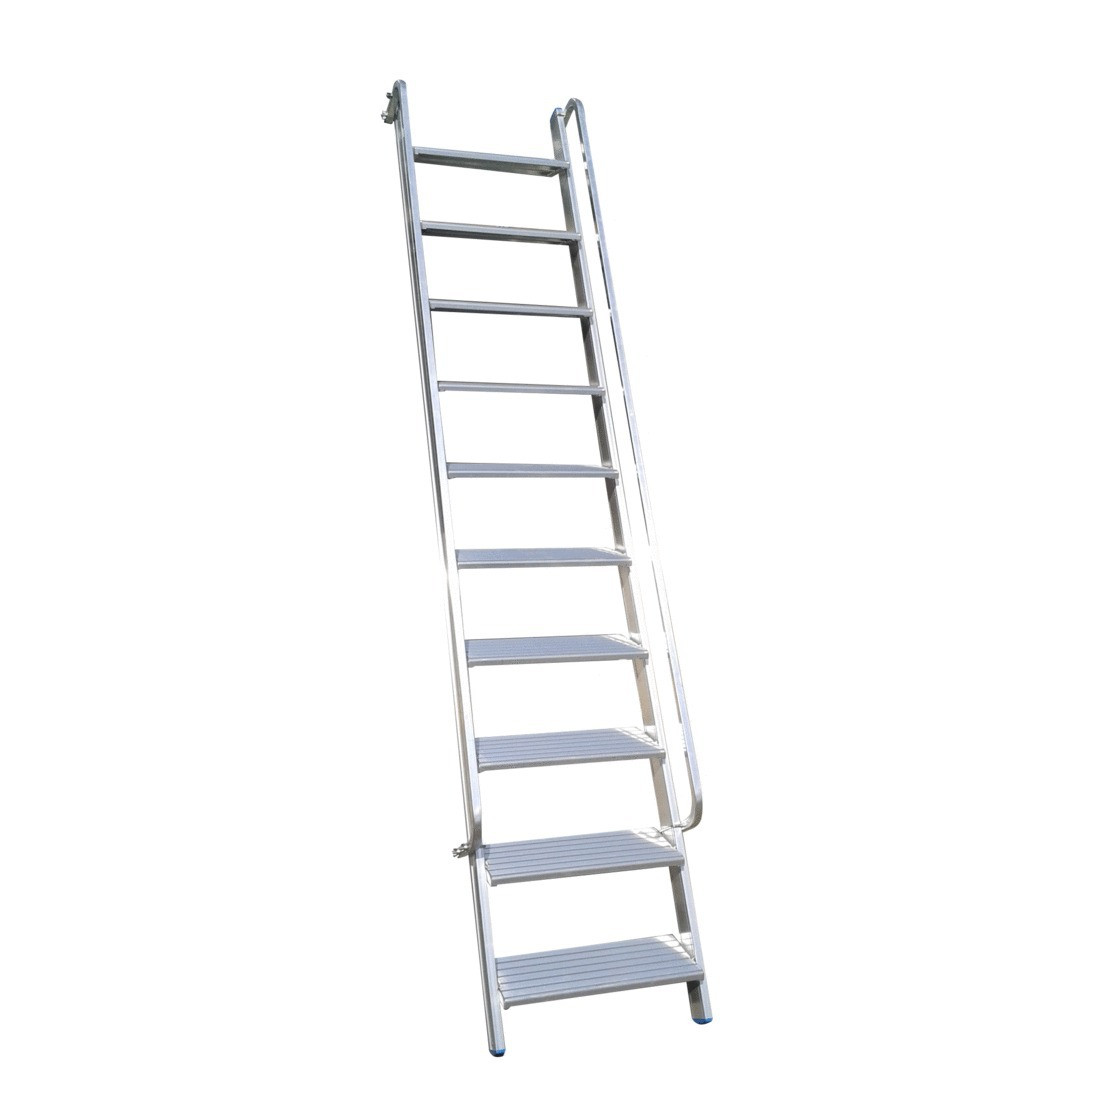 LEEVEL step access ladder 200 mm (8")